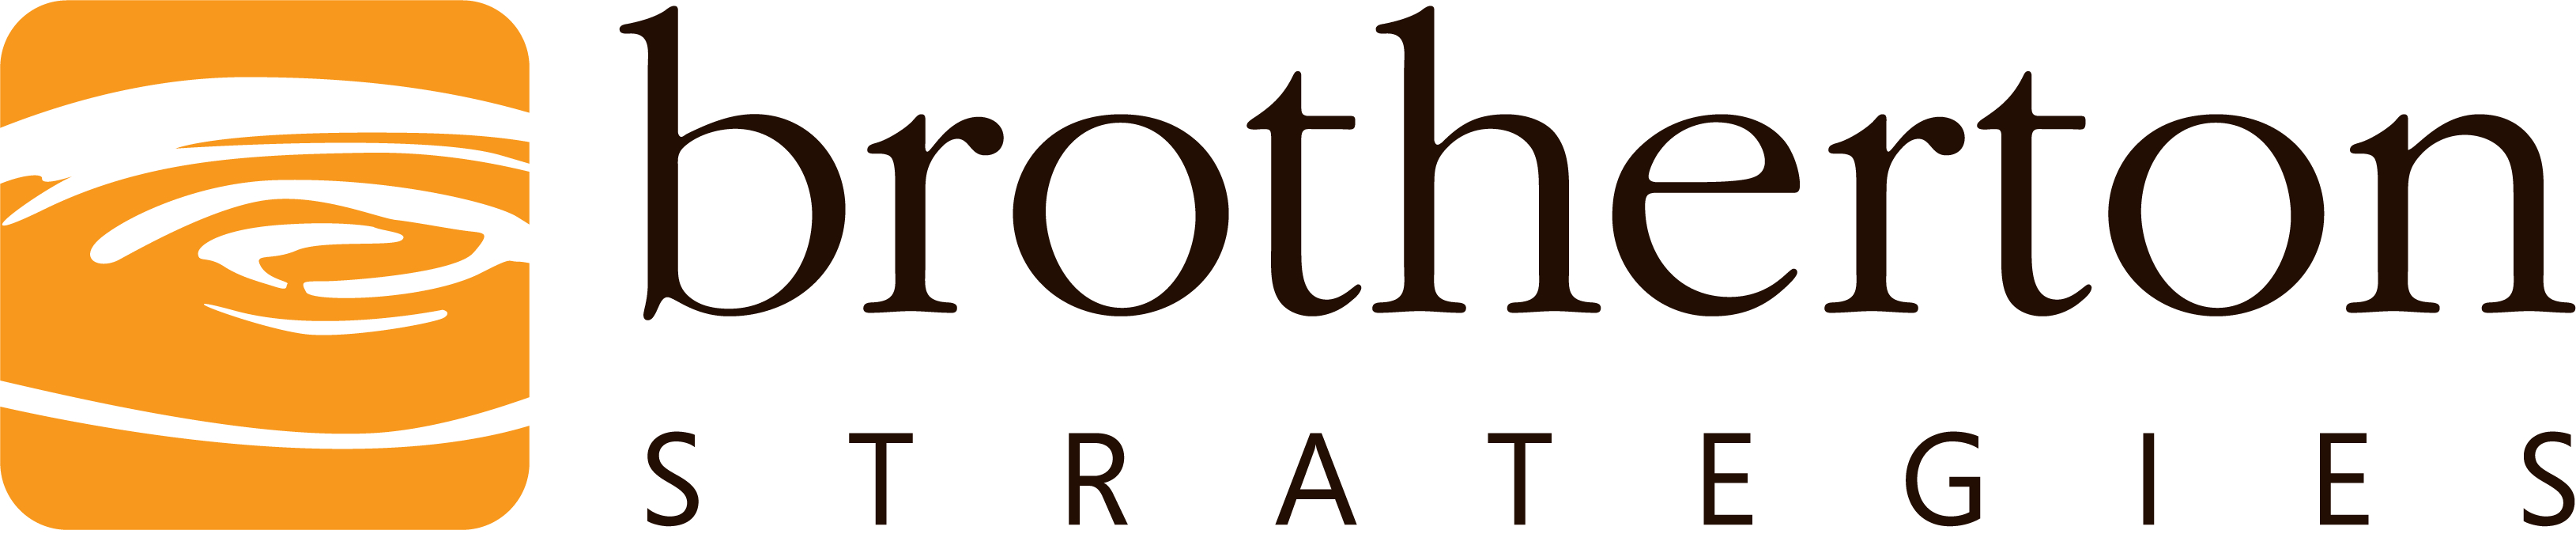 brotherton logo